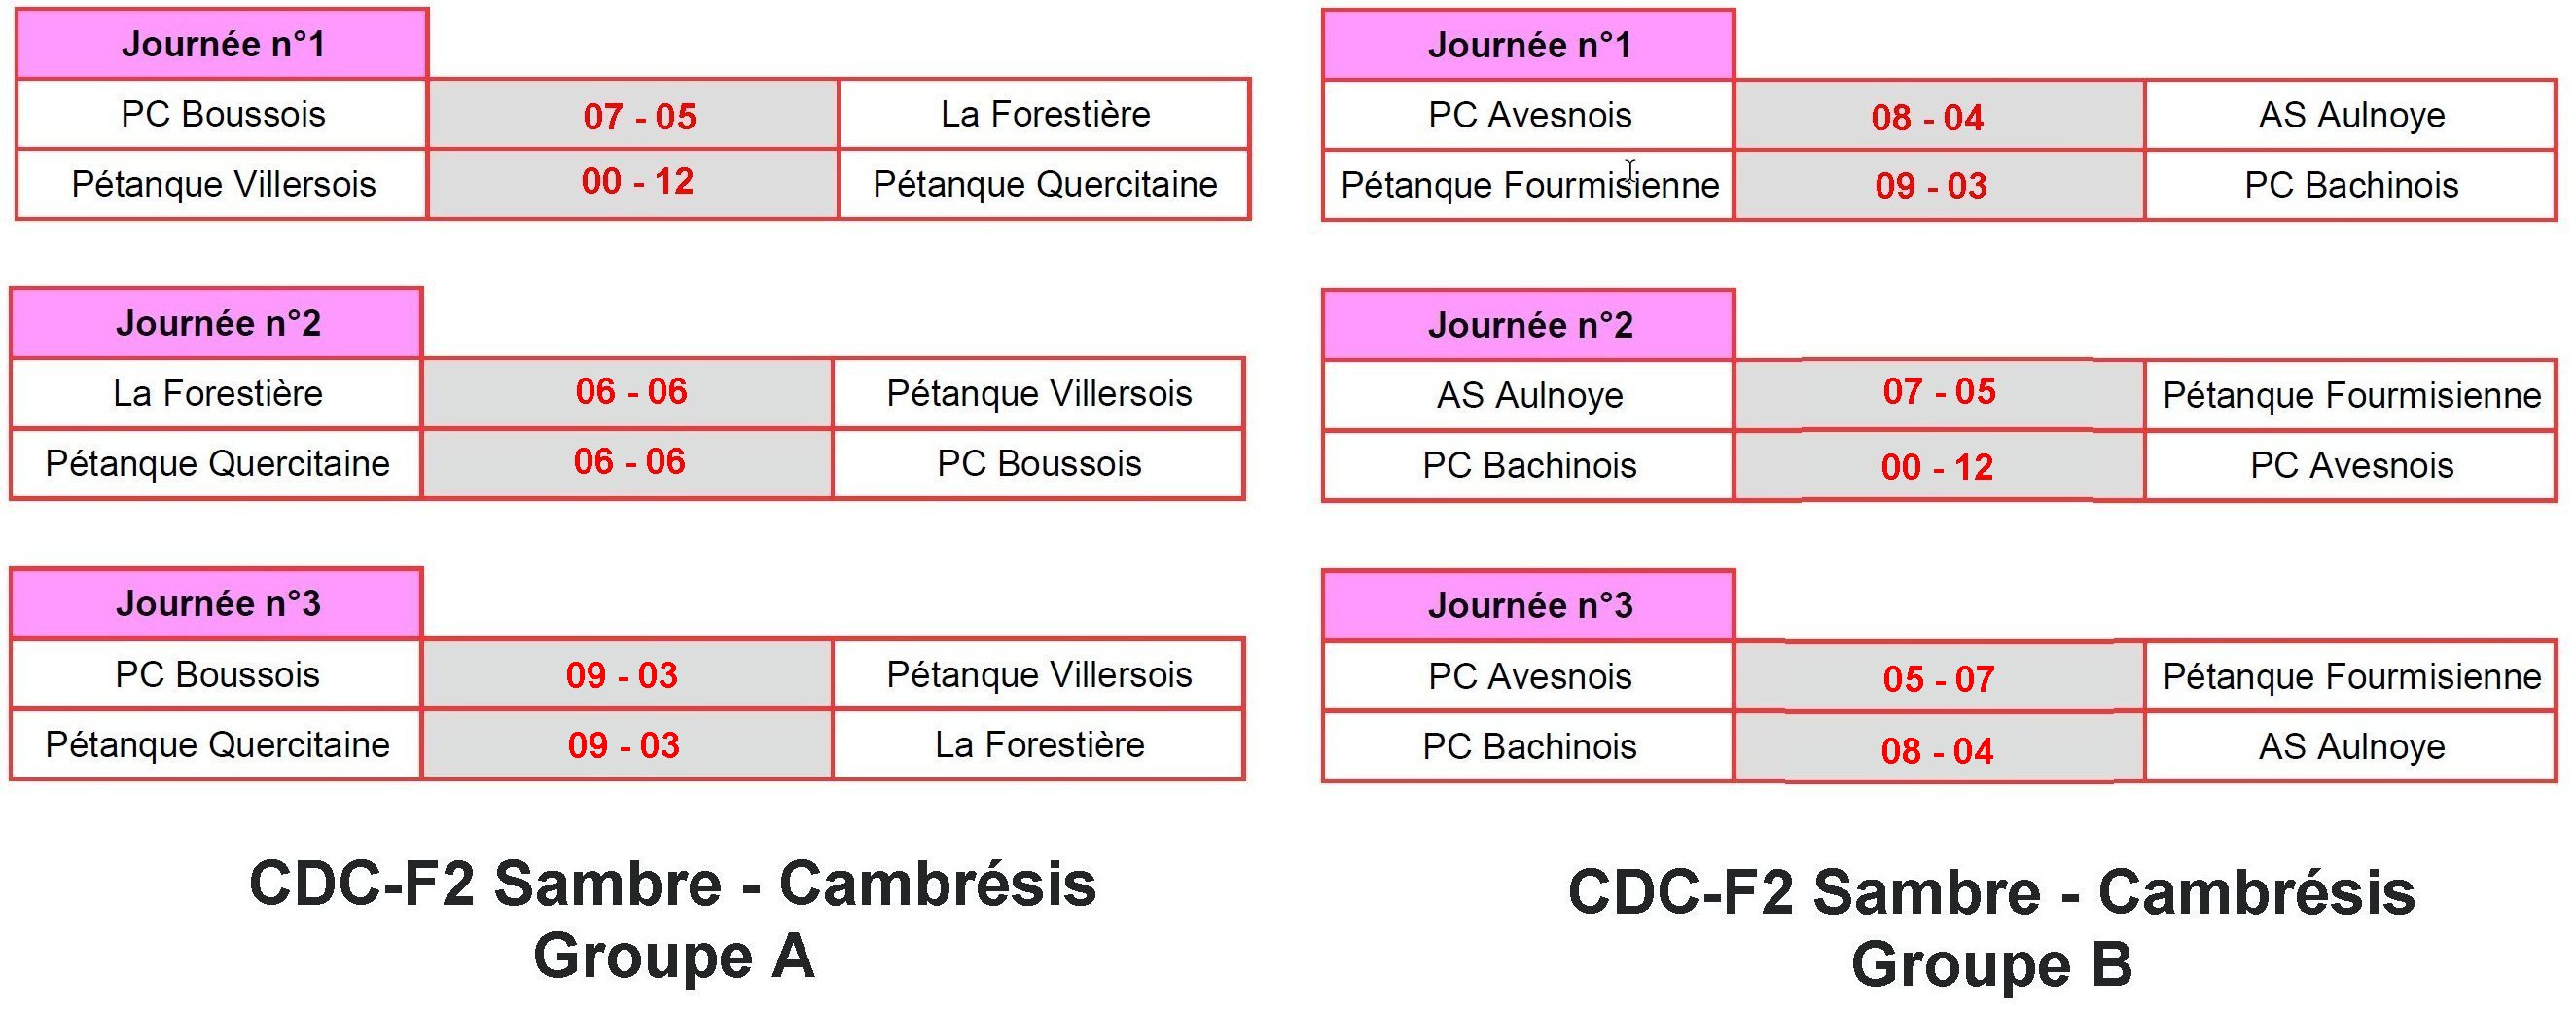 CDC F2 Sambre Cambresis